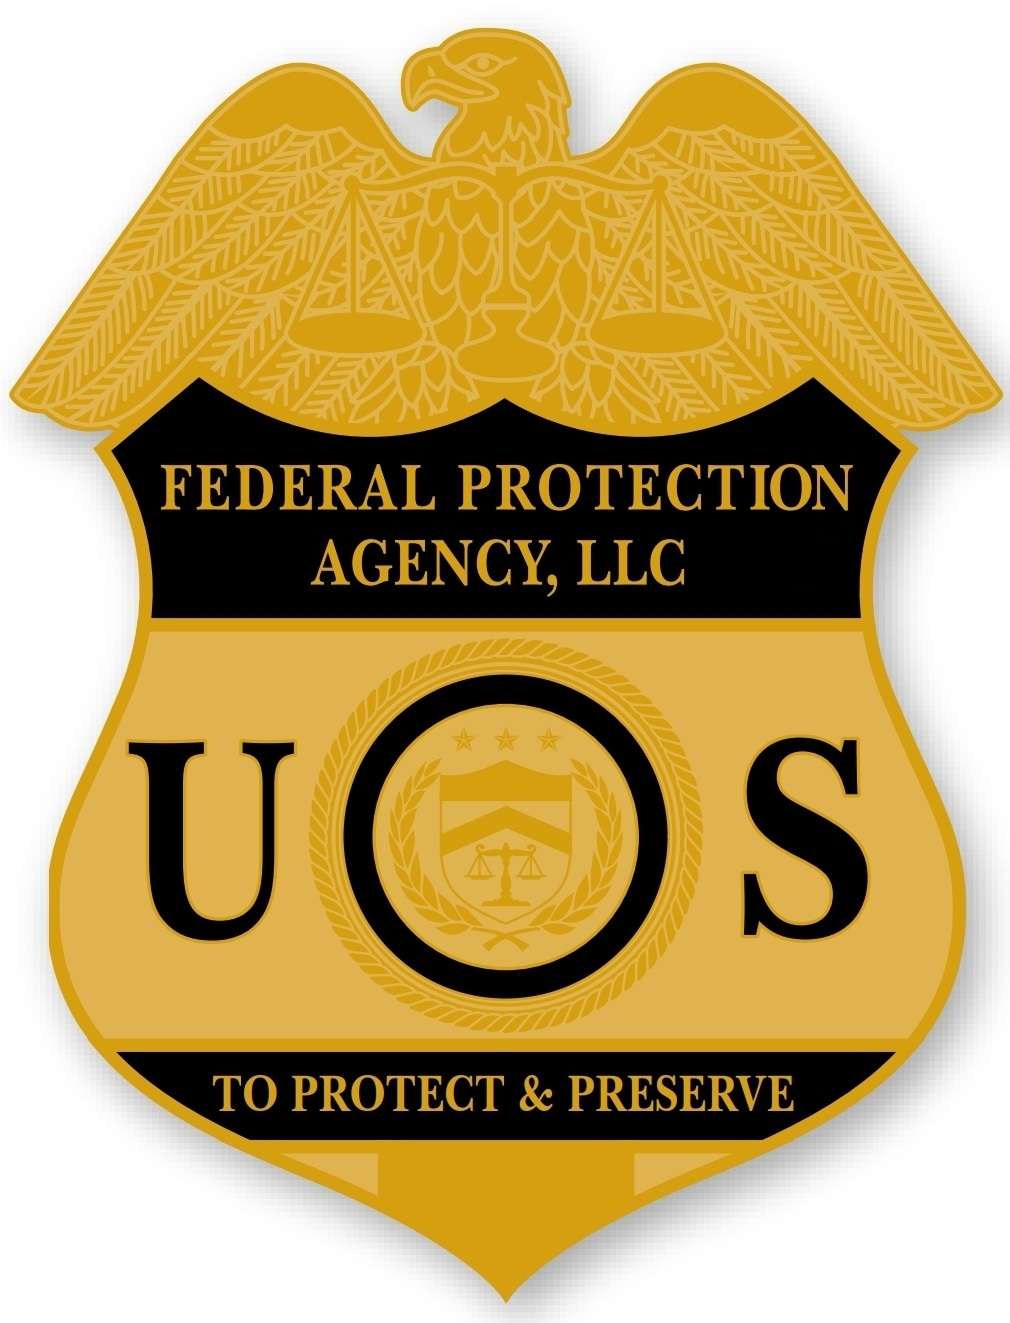 Federal Protection Agency, Inc | Better Business Bureau® Profile